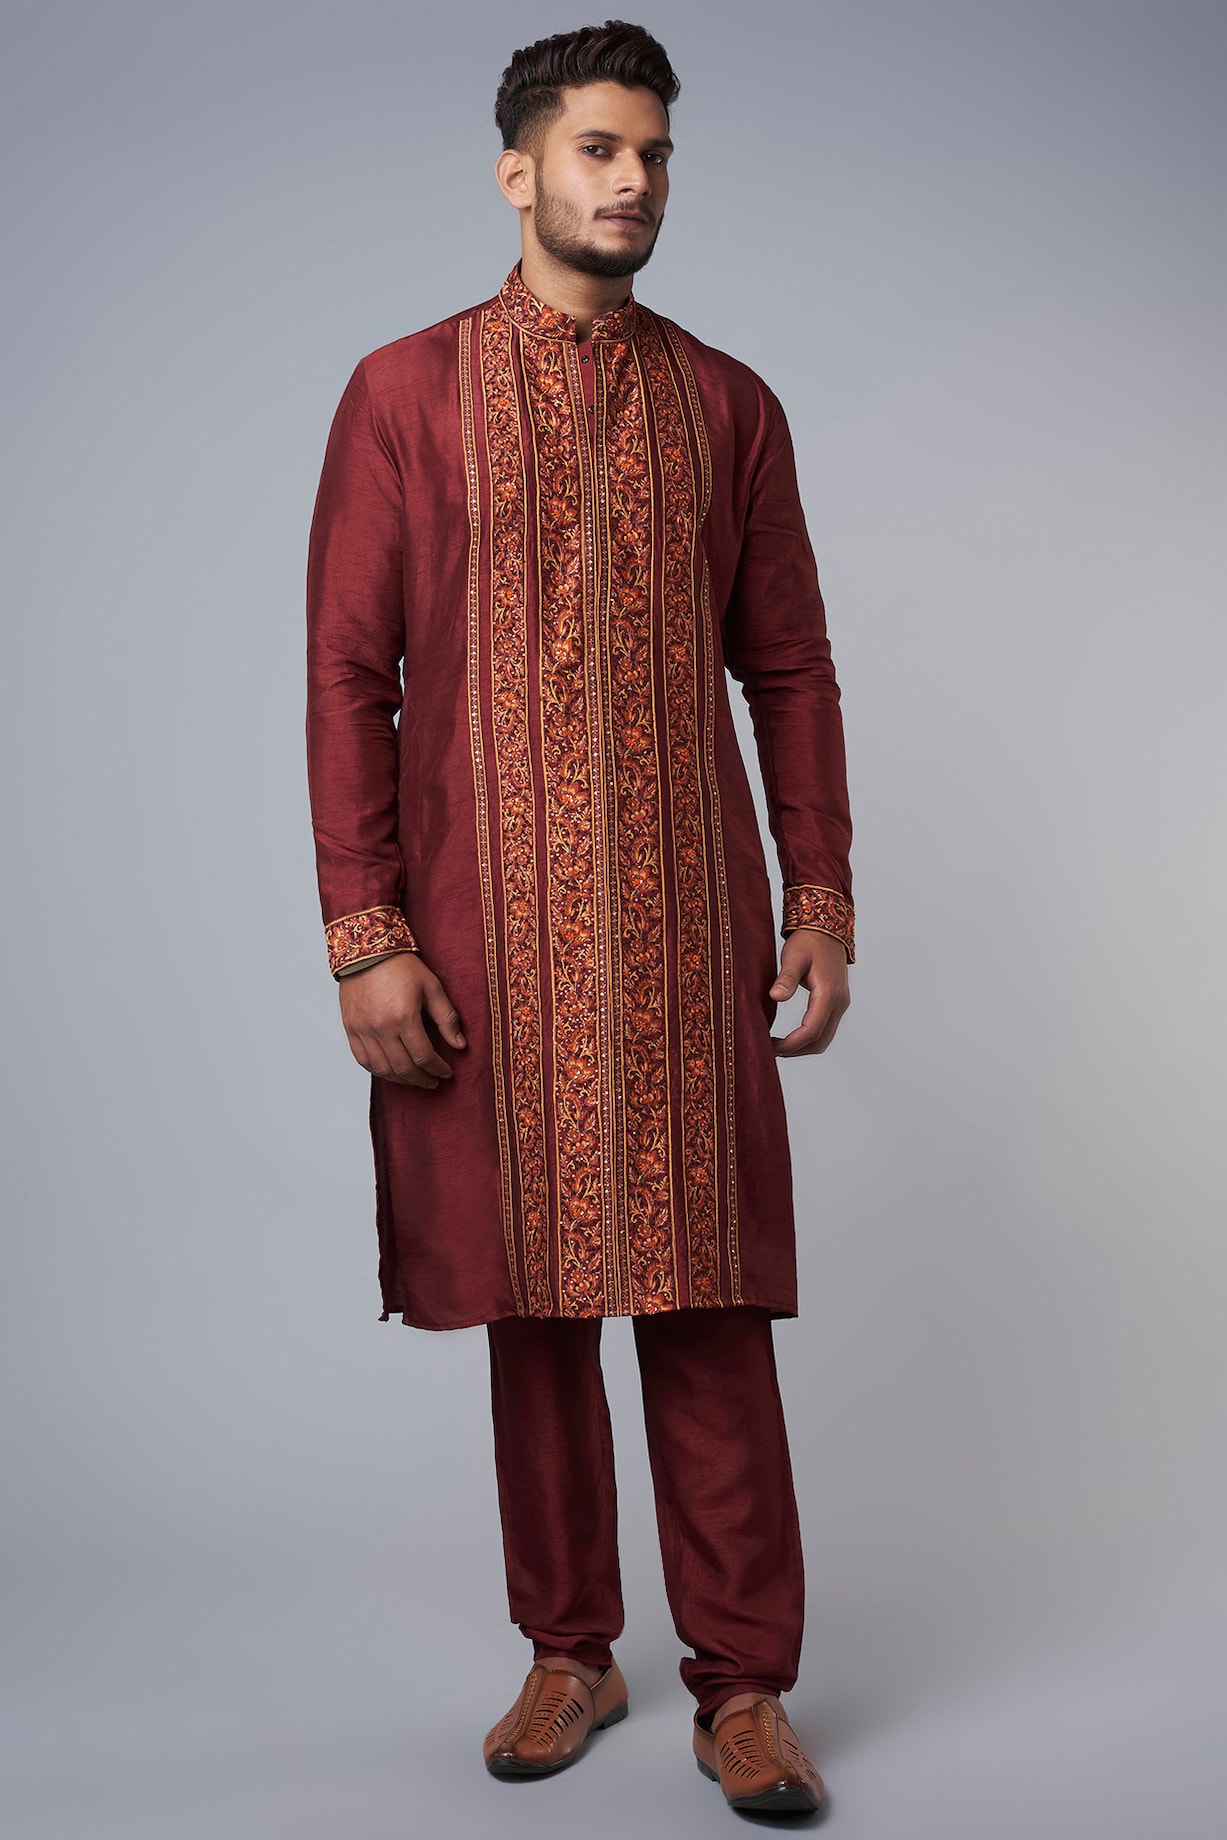 Brick Red Fusion Sherwani Look by Hemant Trevedi Men